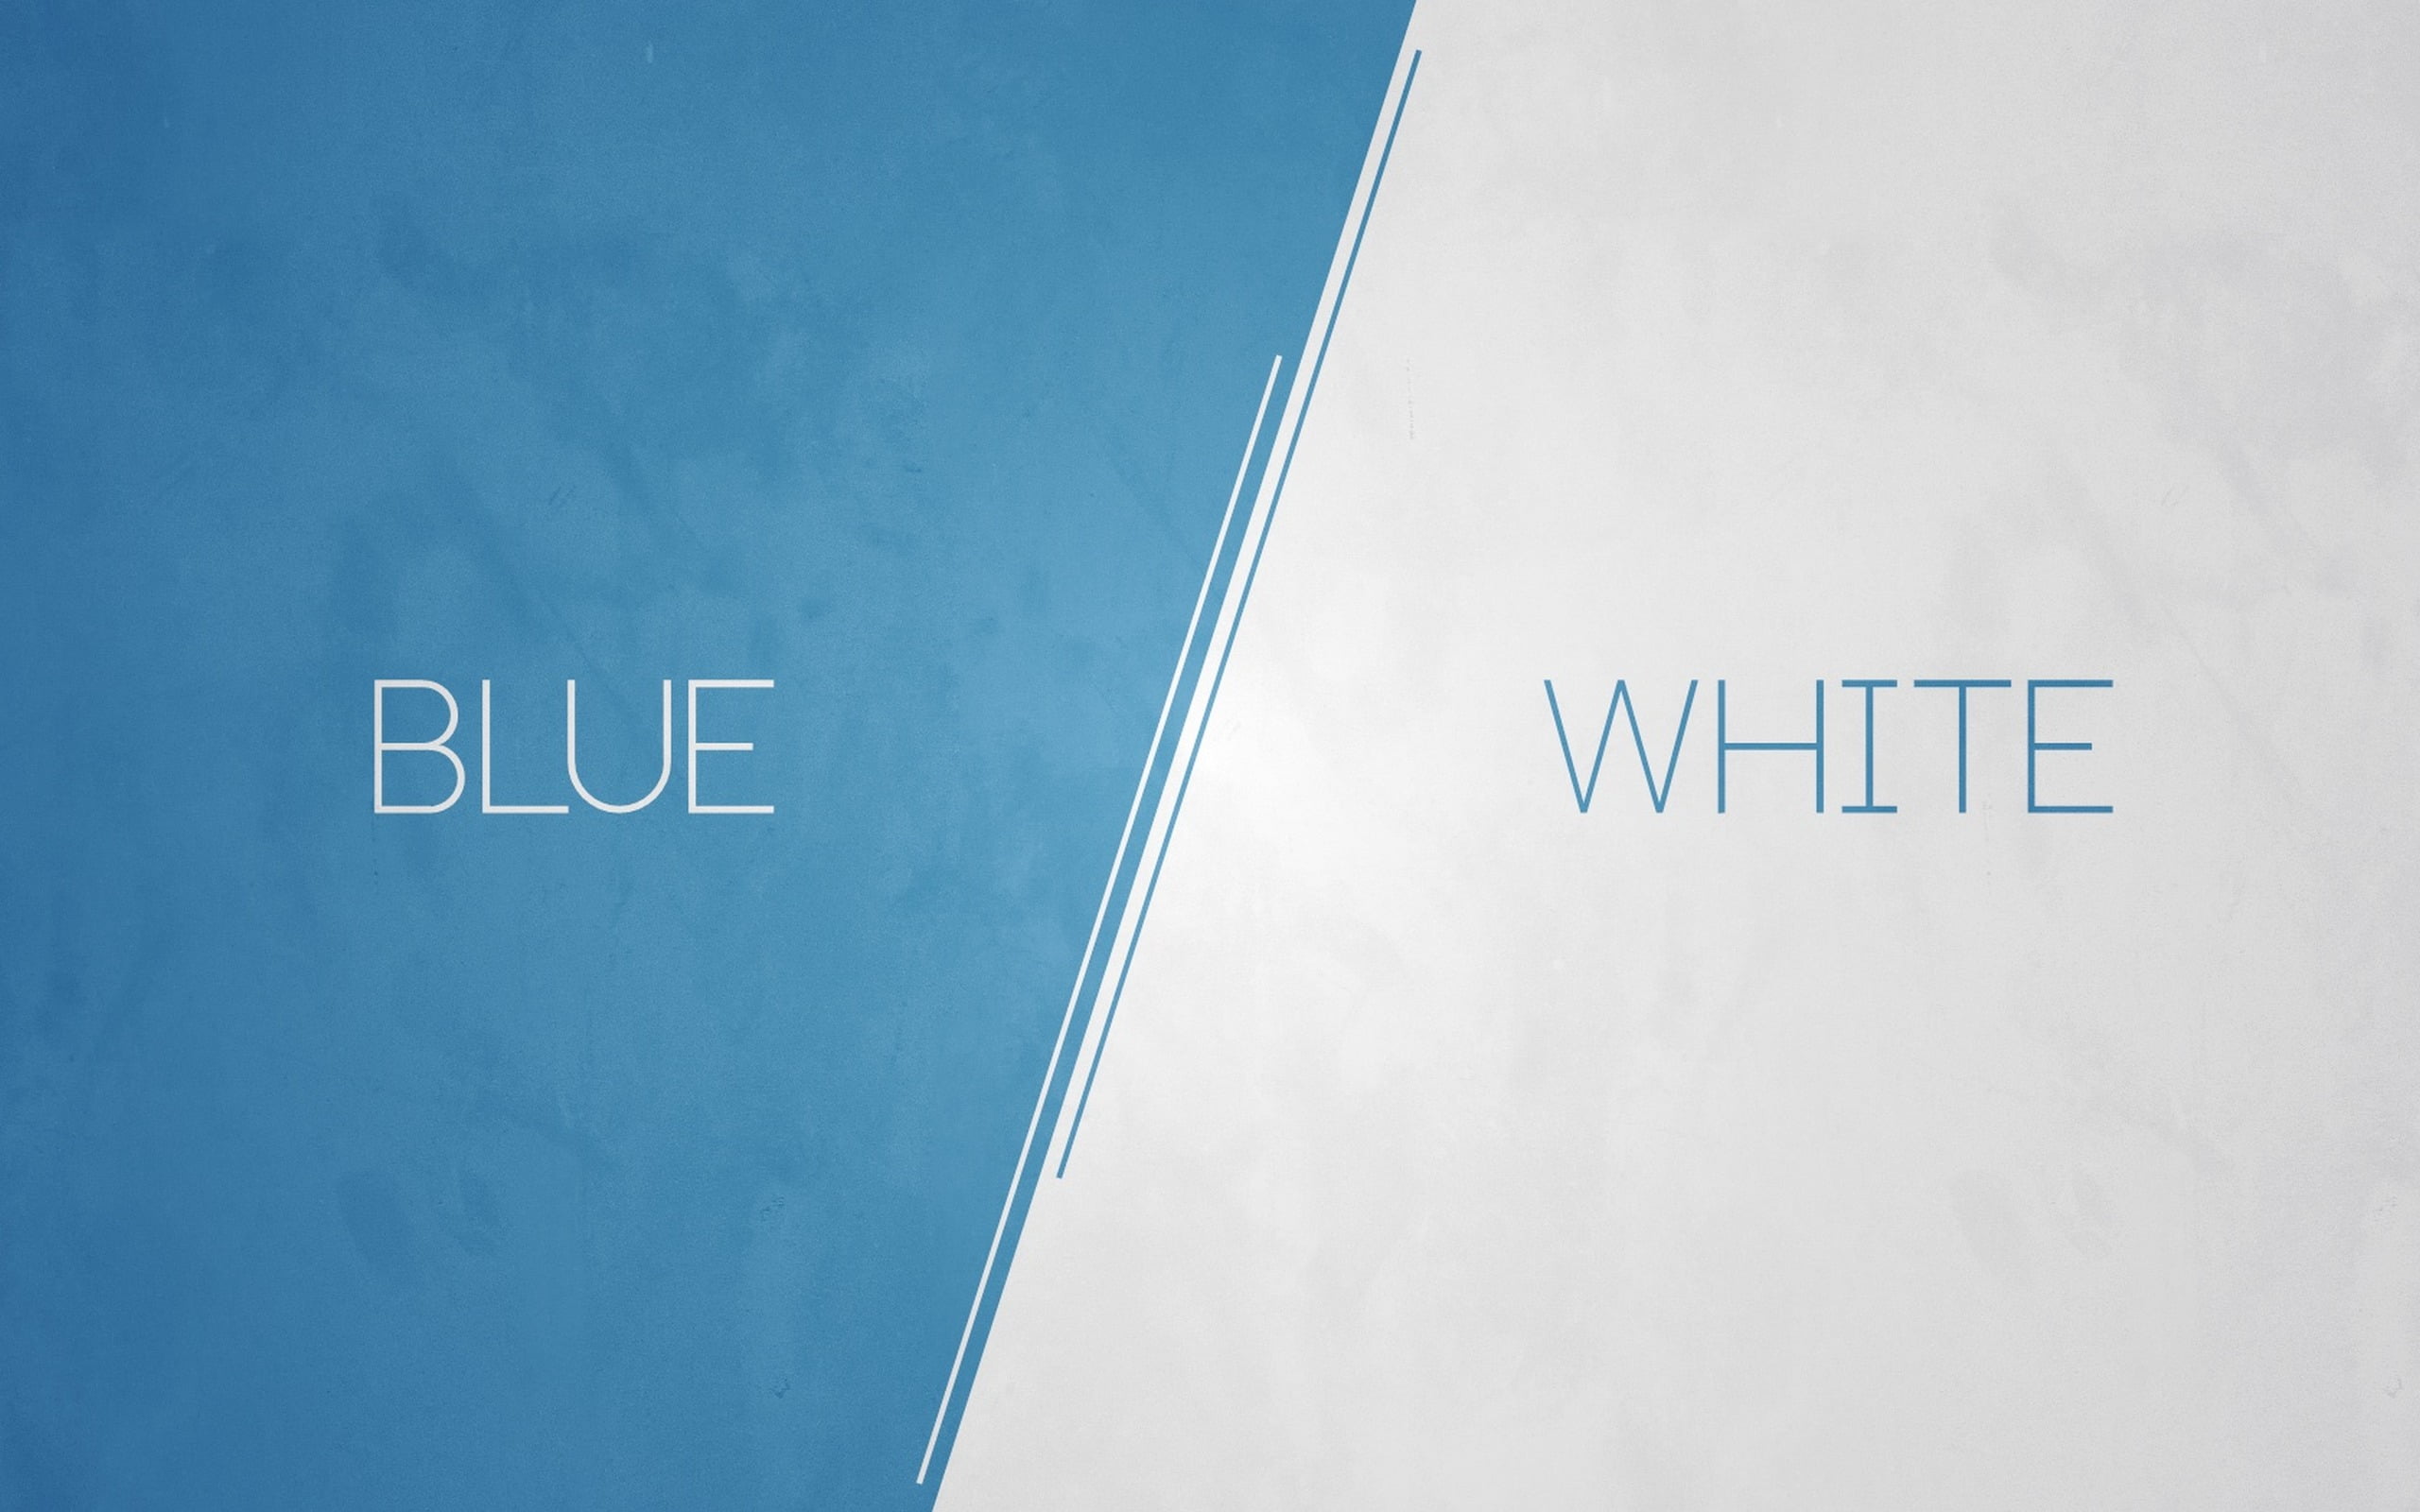 white and blue logo, abstract, modern, vintage, minimalism, digital art